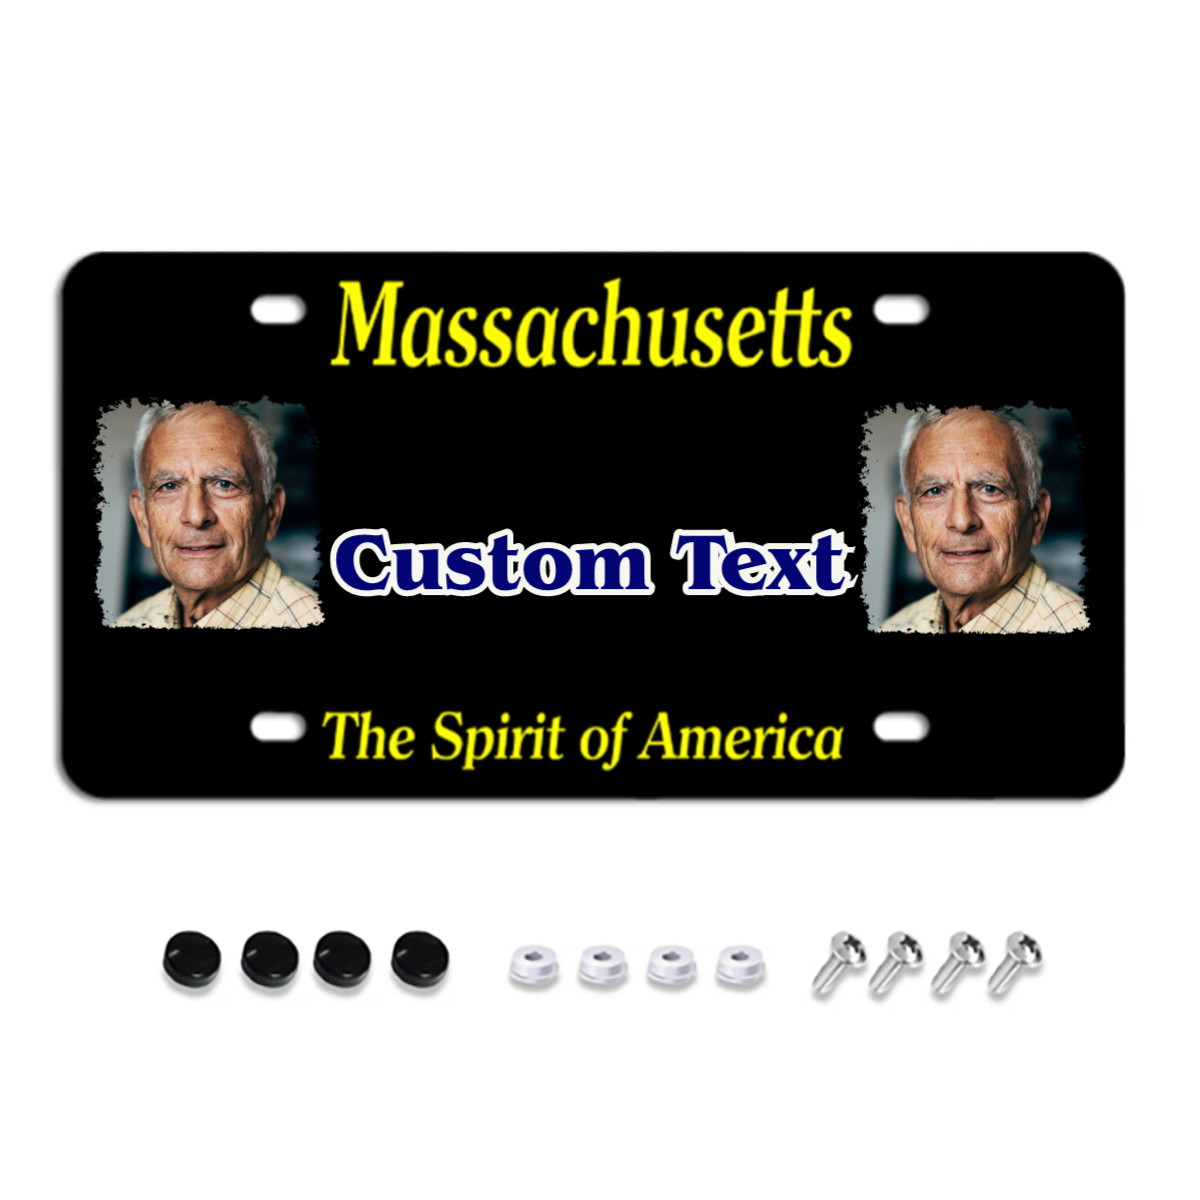 Massachusetts Custom License Plates, Personalized Photo & Text & Background